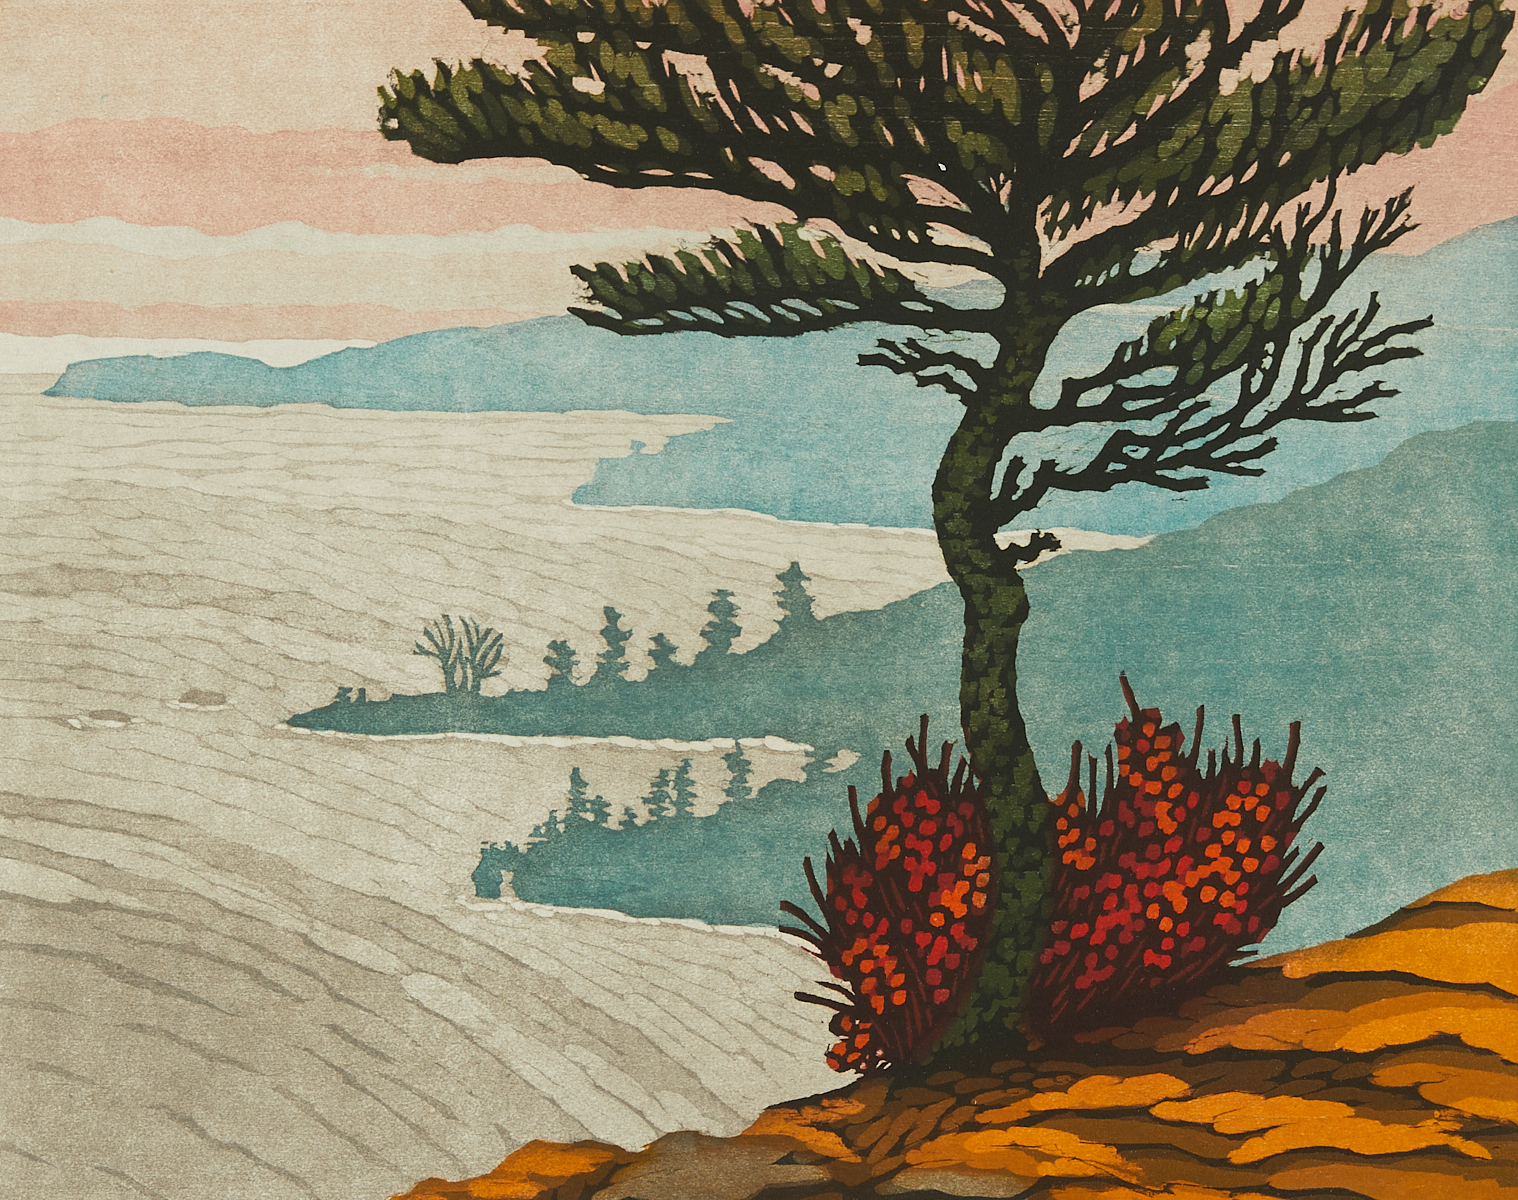 Jim Meyer "The Lone Pine" Woodblock Print